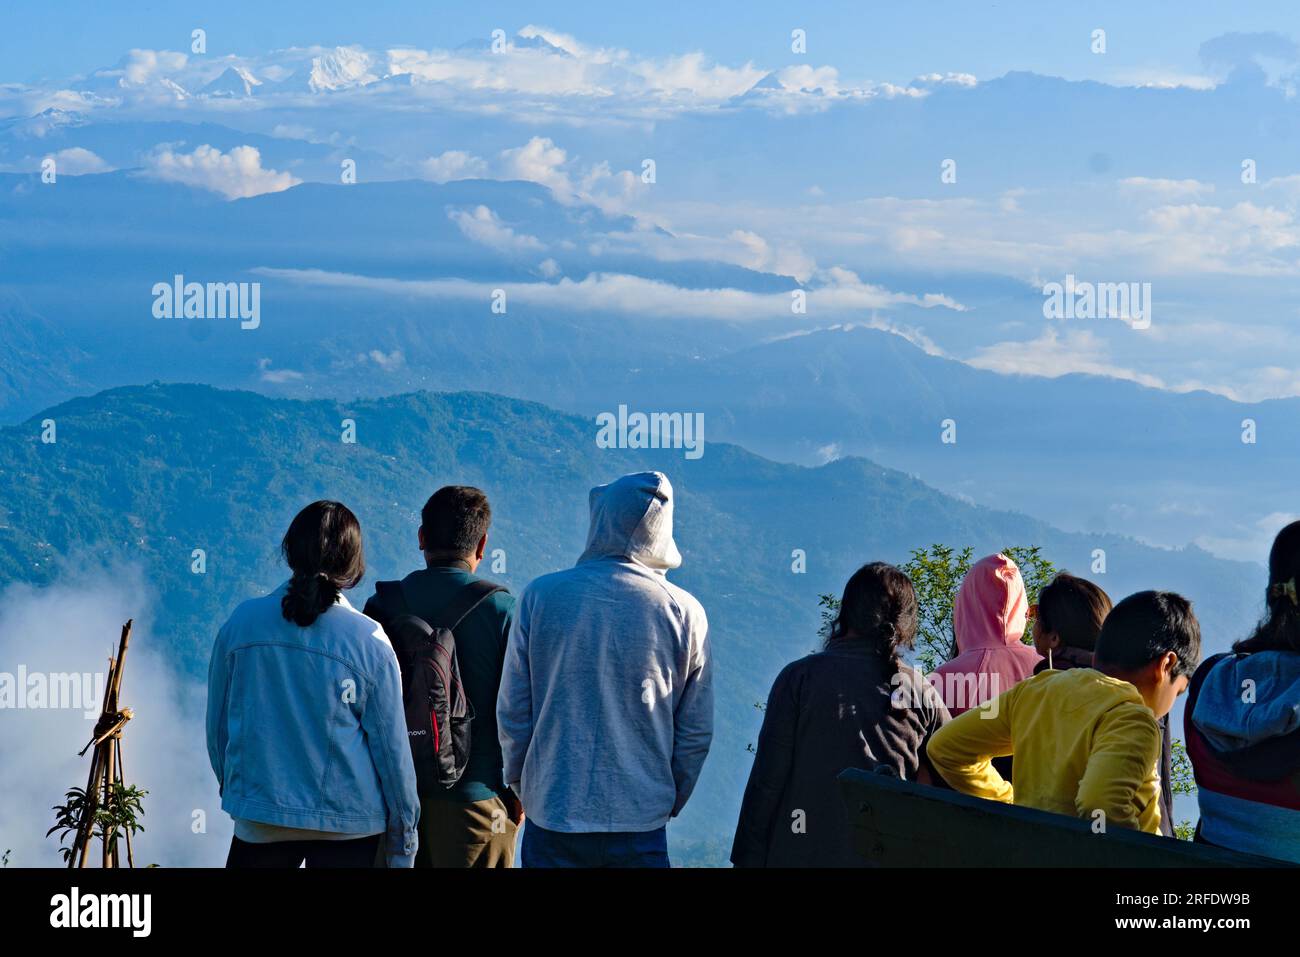 Darjeeling: Not just tea - Tripoto